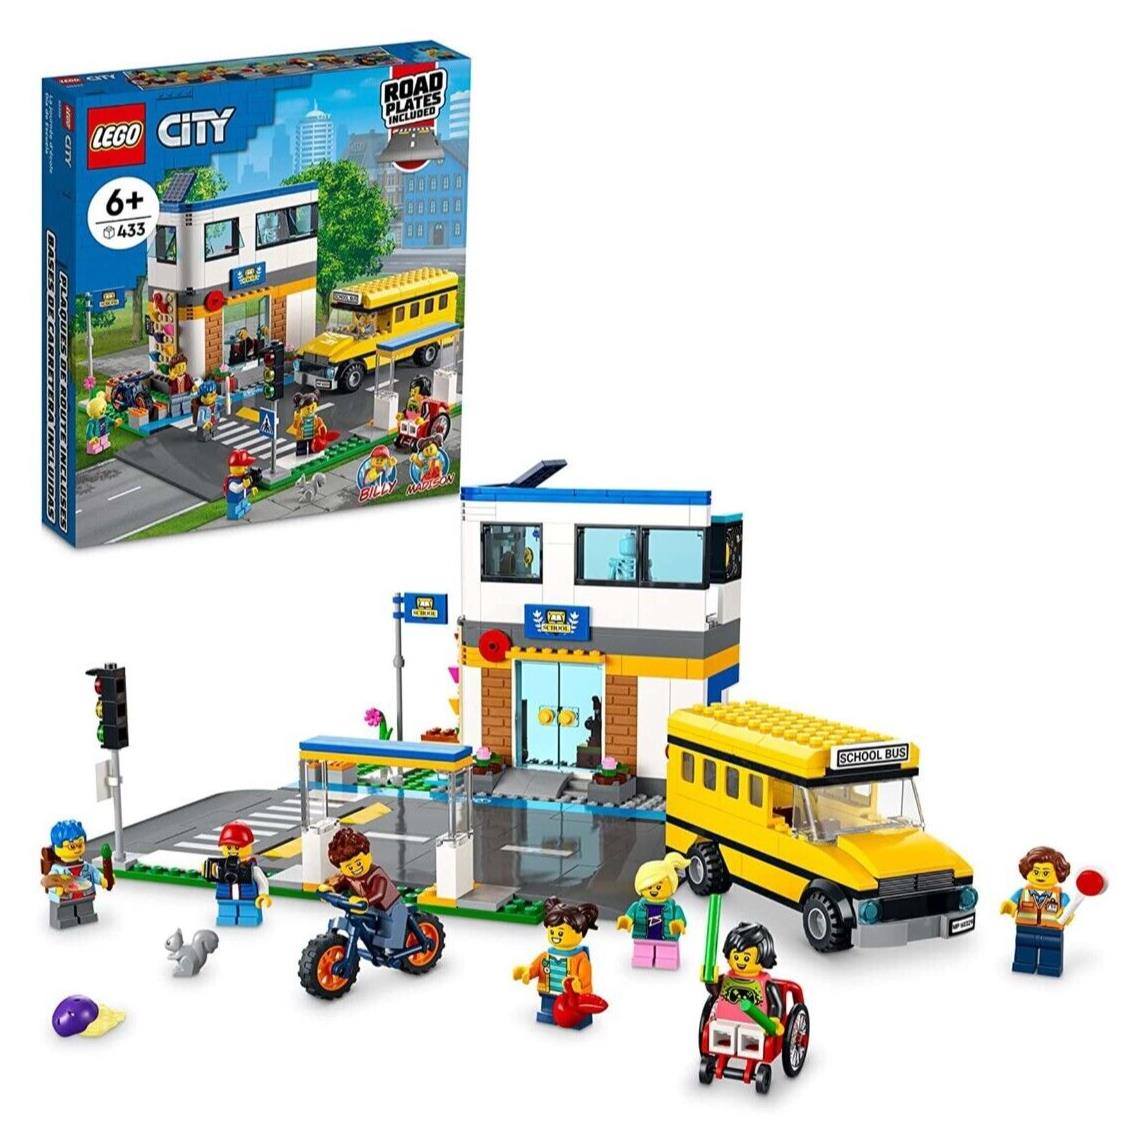 Lego City School Day 60329 Building Set